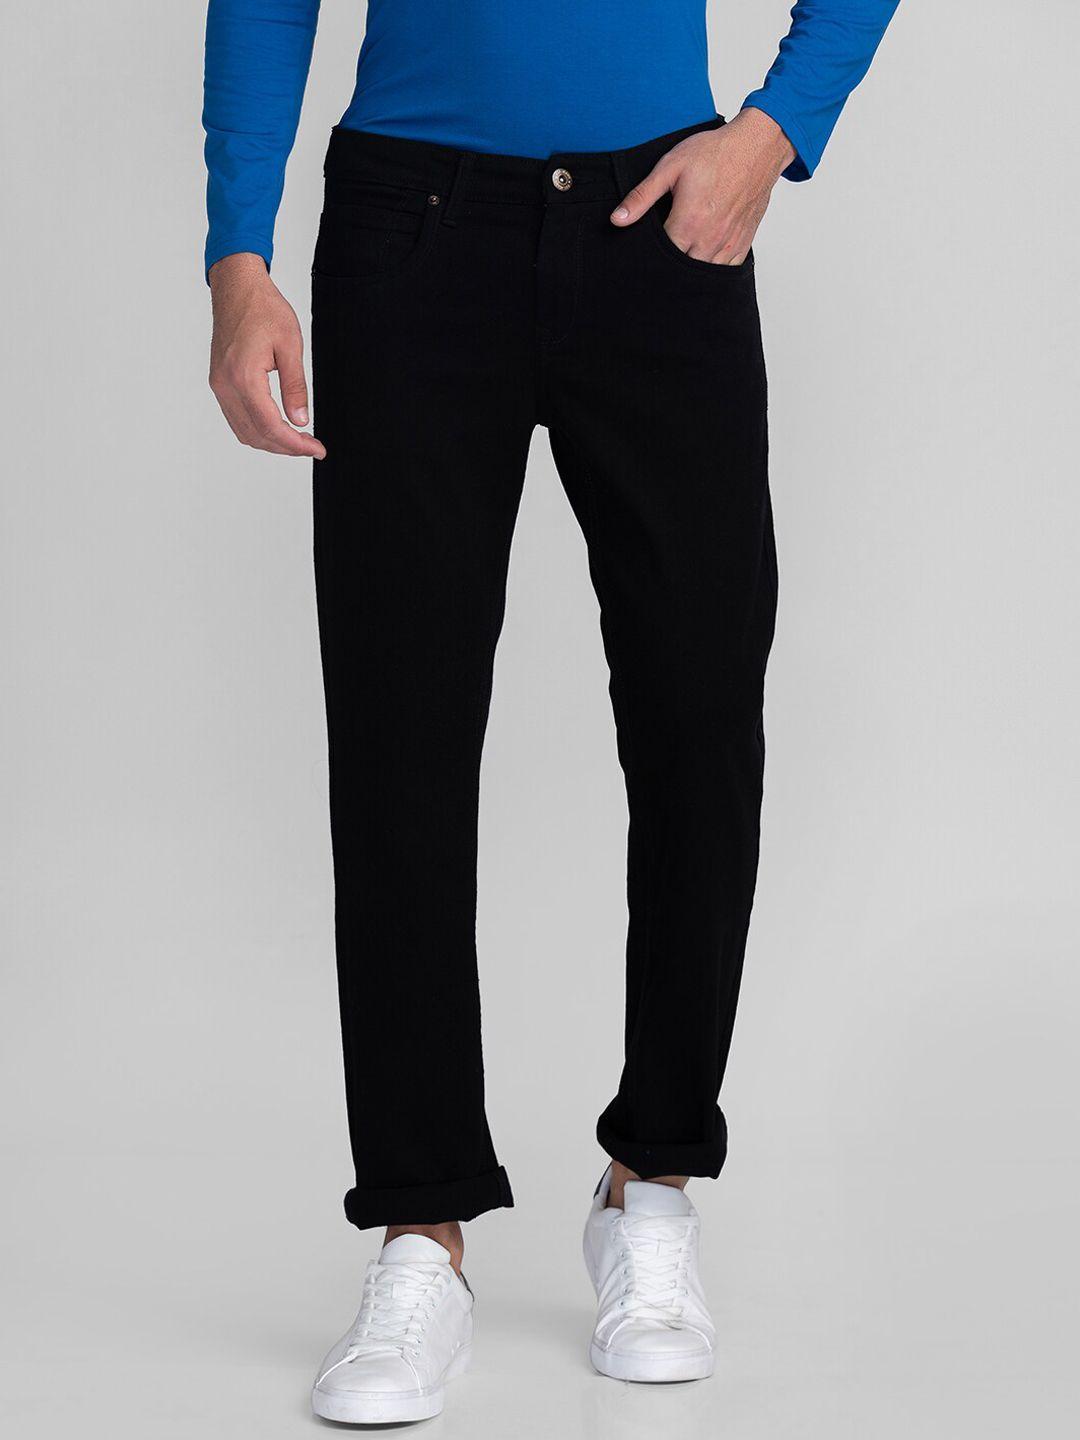 globus men black tapered fit stretchable cotton jeans